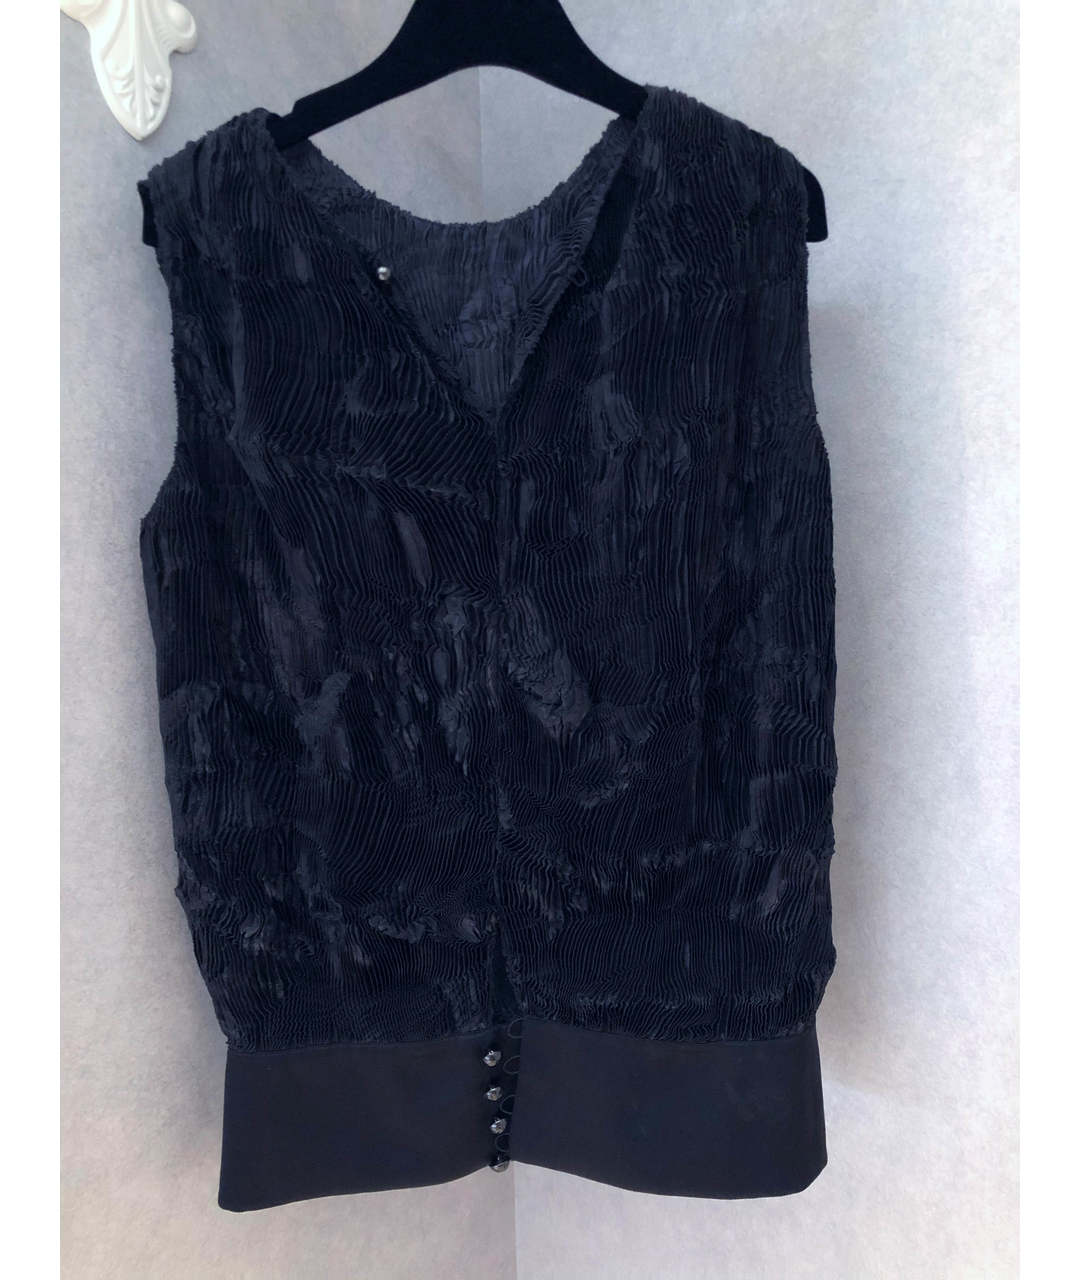 CHANEL PRE-OWNED Черная полиэстеровая рубашка, фото 2